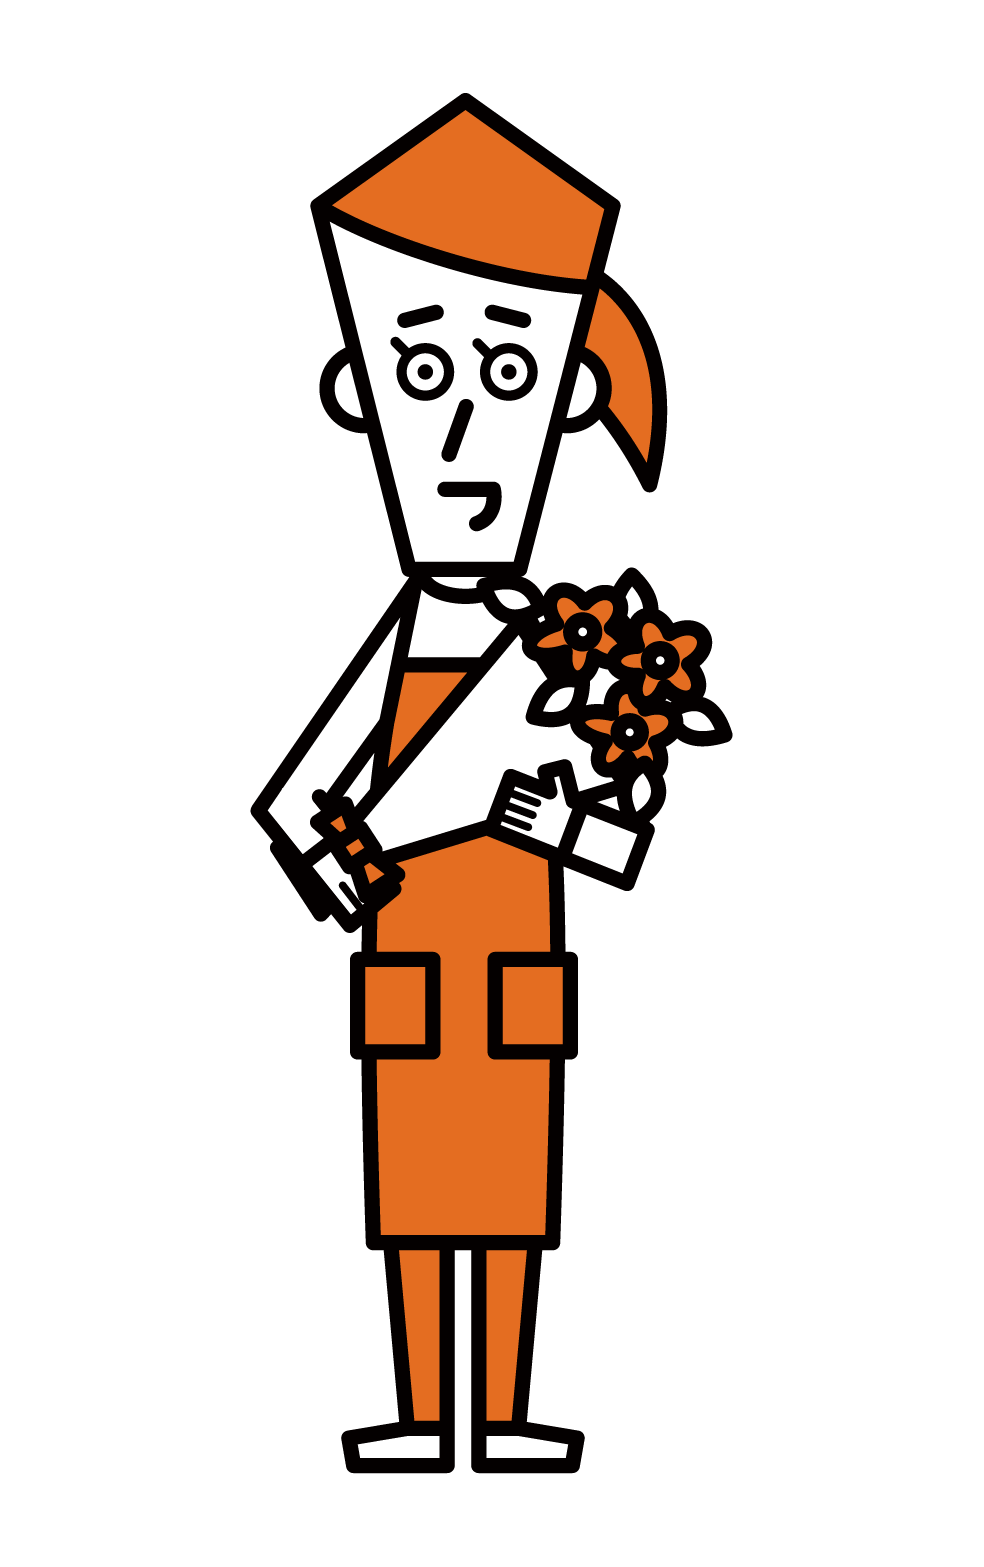 Illustration of a florist clerk (female)